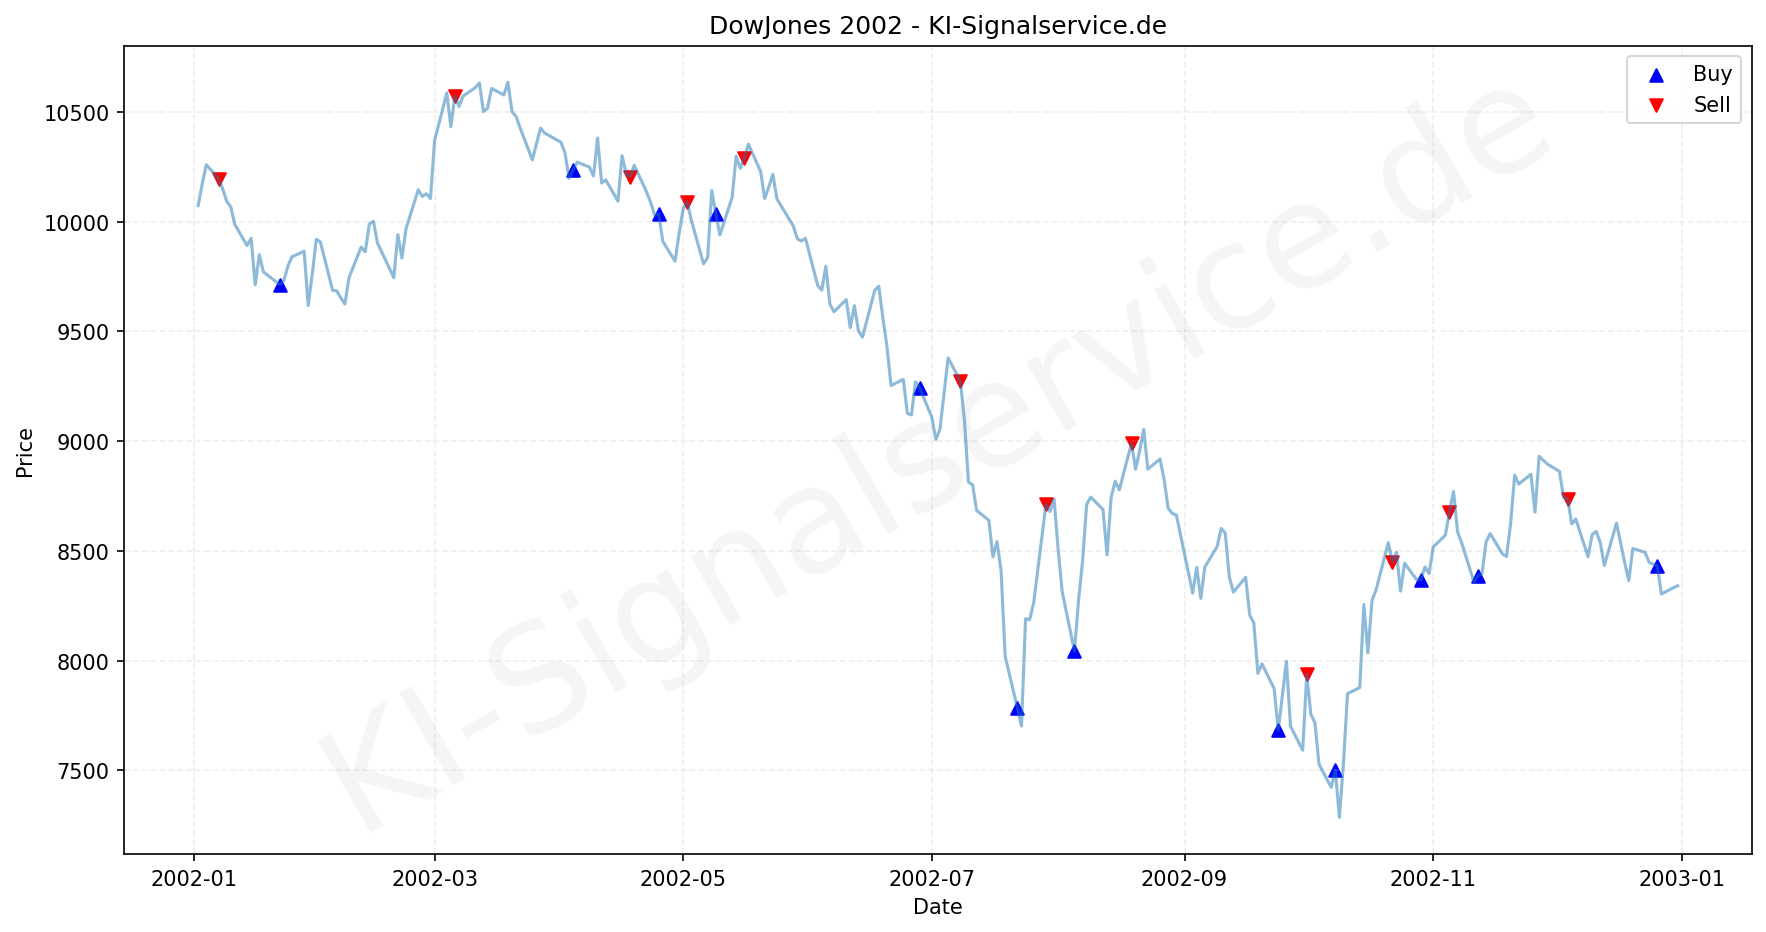 DOWJONES Index Performance Chart - KI Tradingsignale 2002